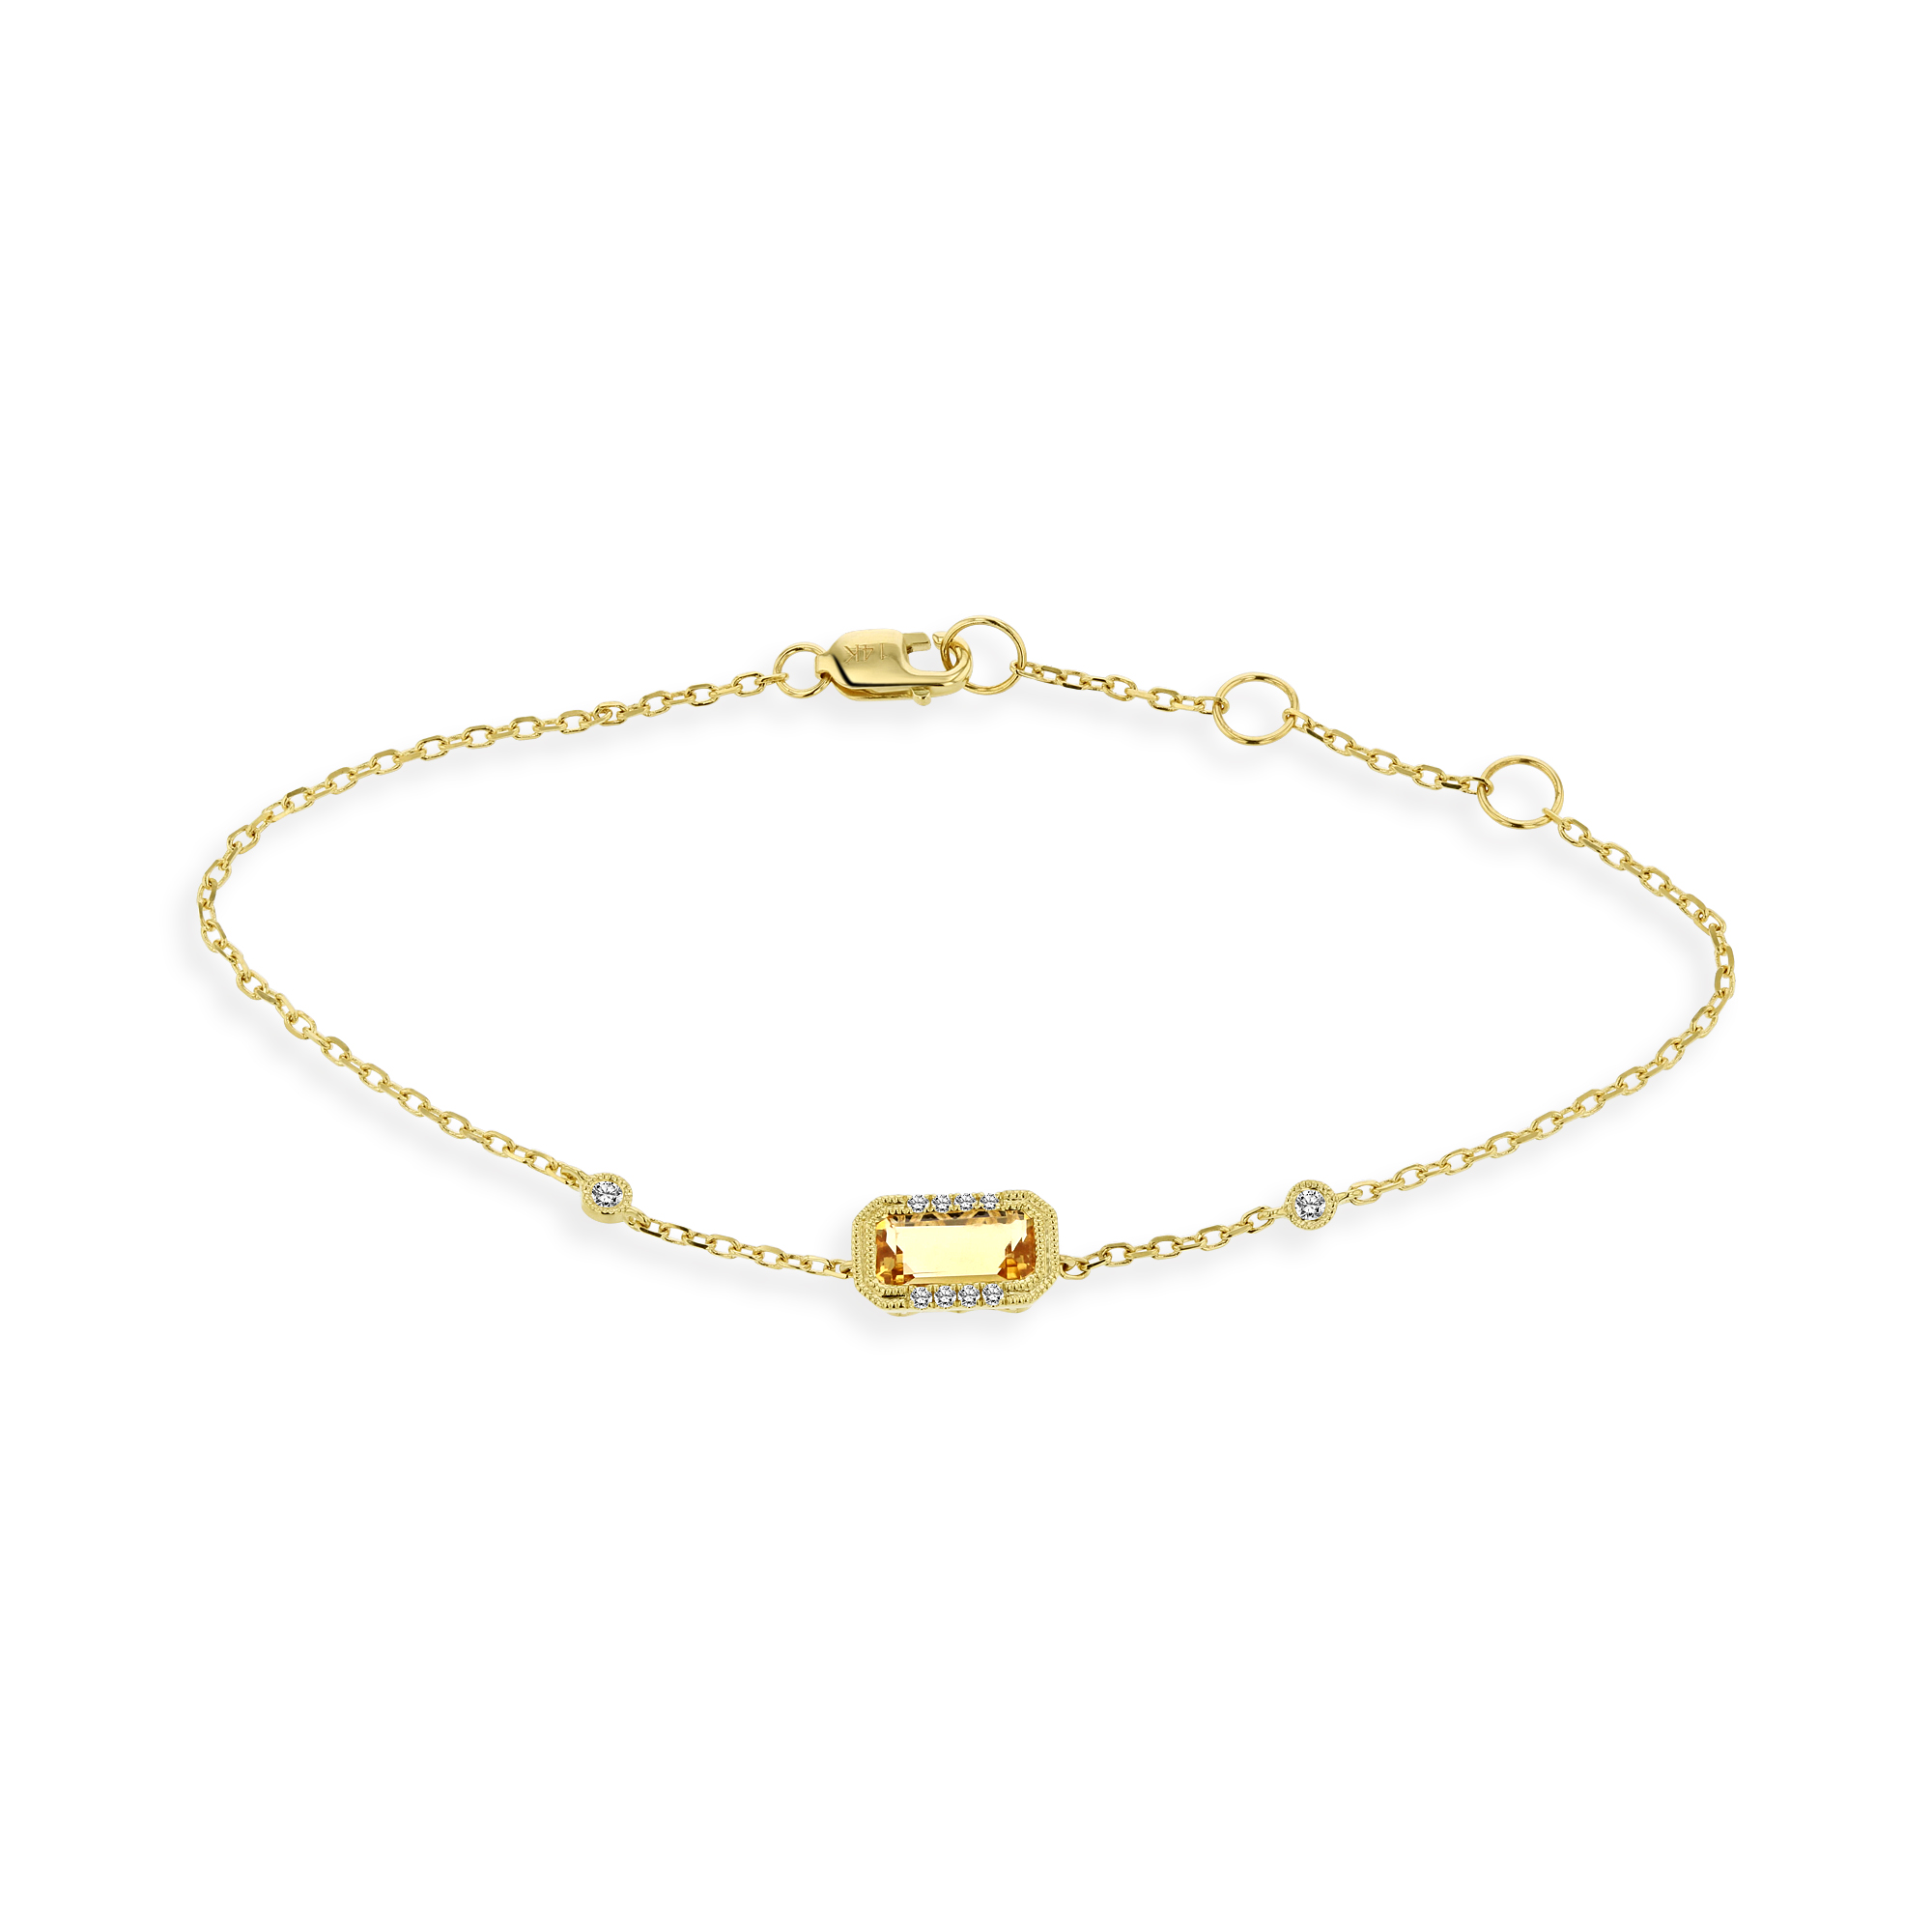 View 0.13ctw Diamond and Citrine Fashion Bracelet in 14k White Gold